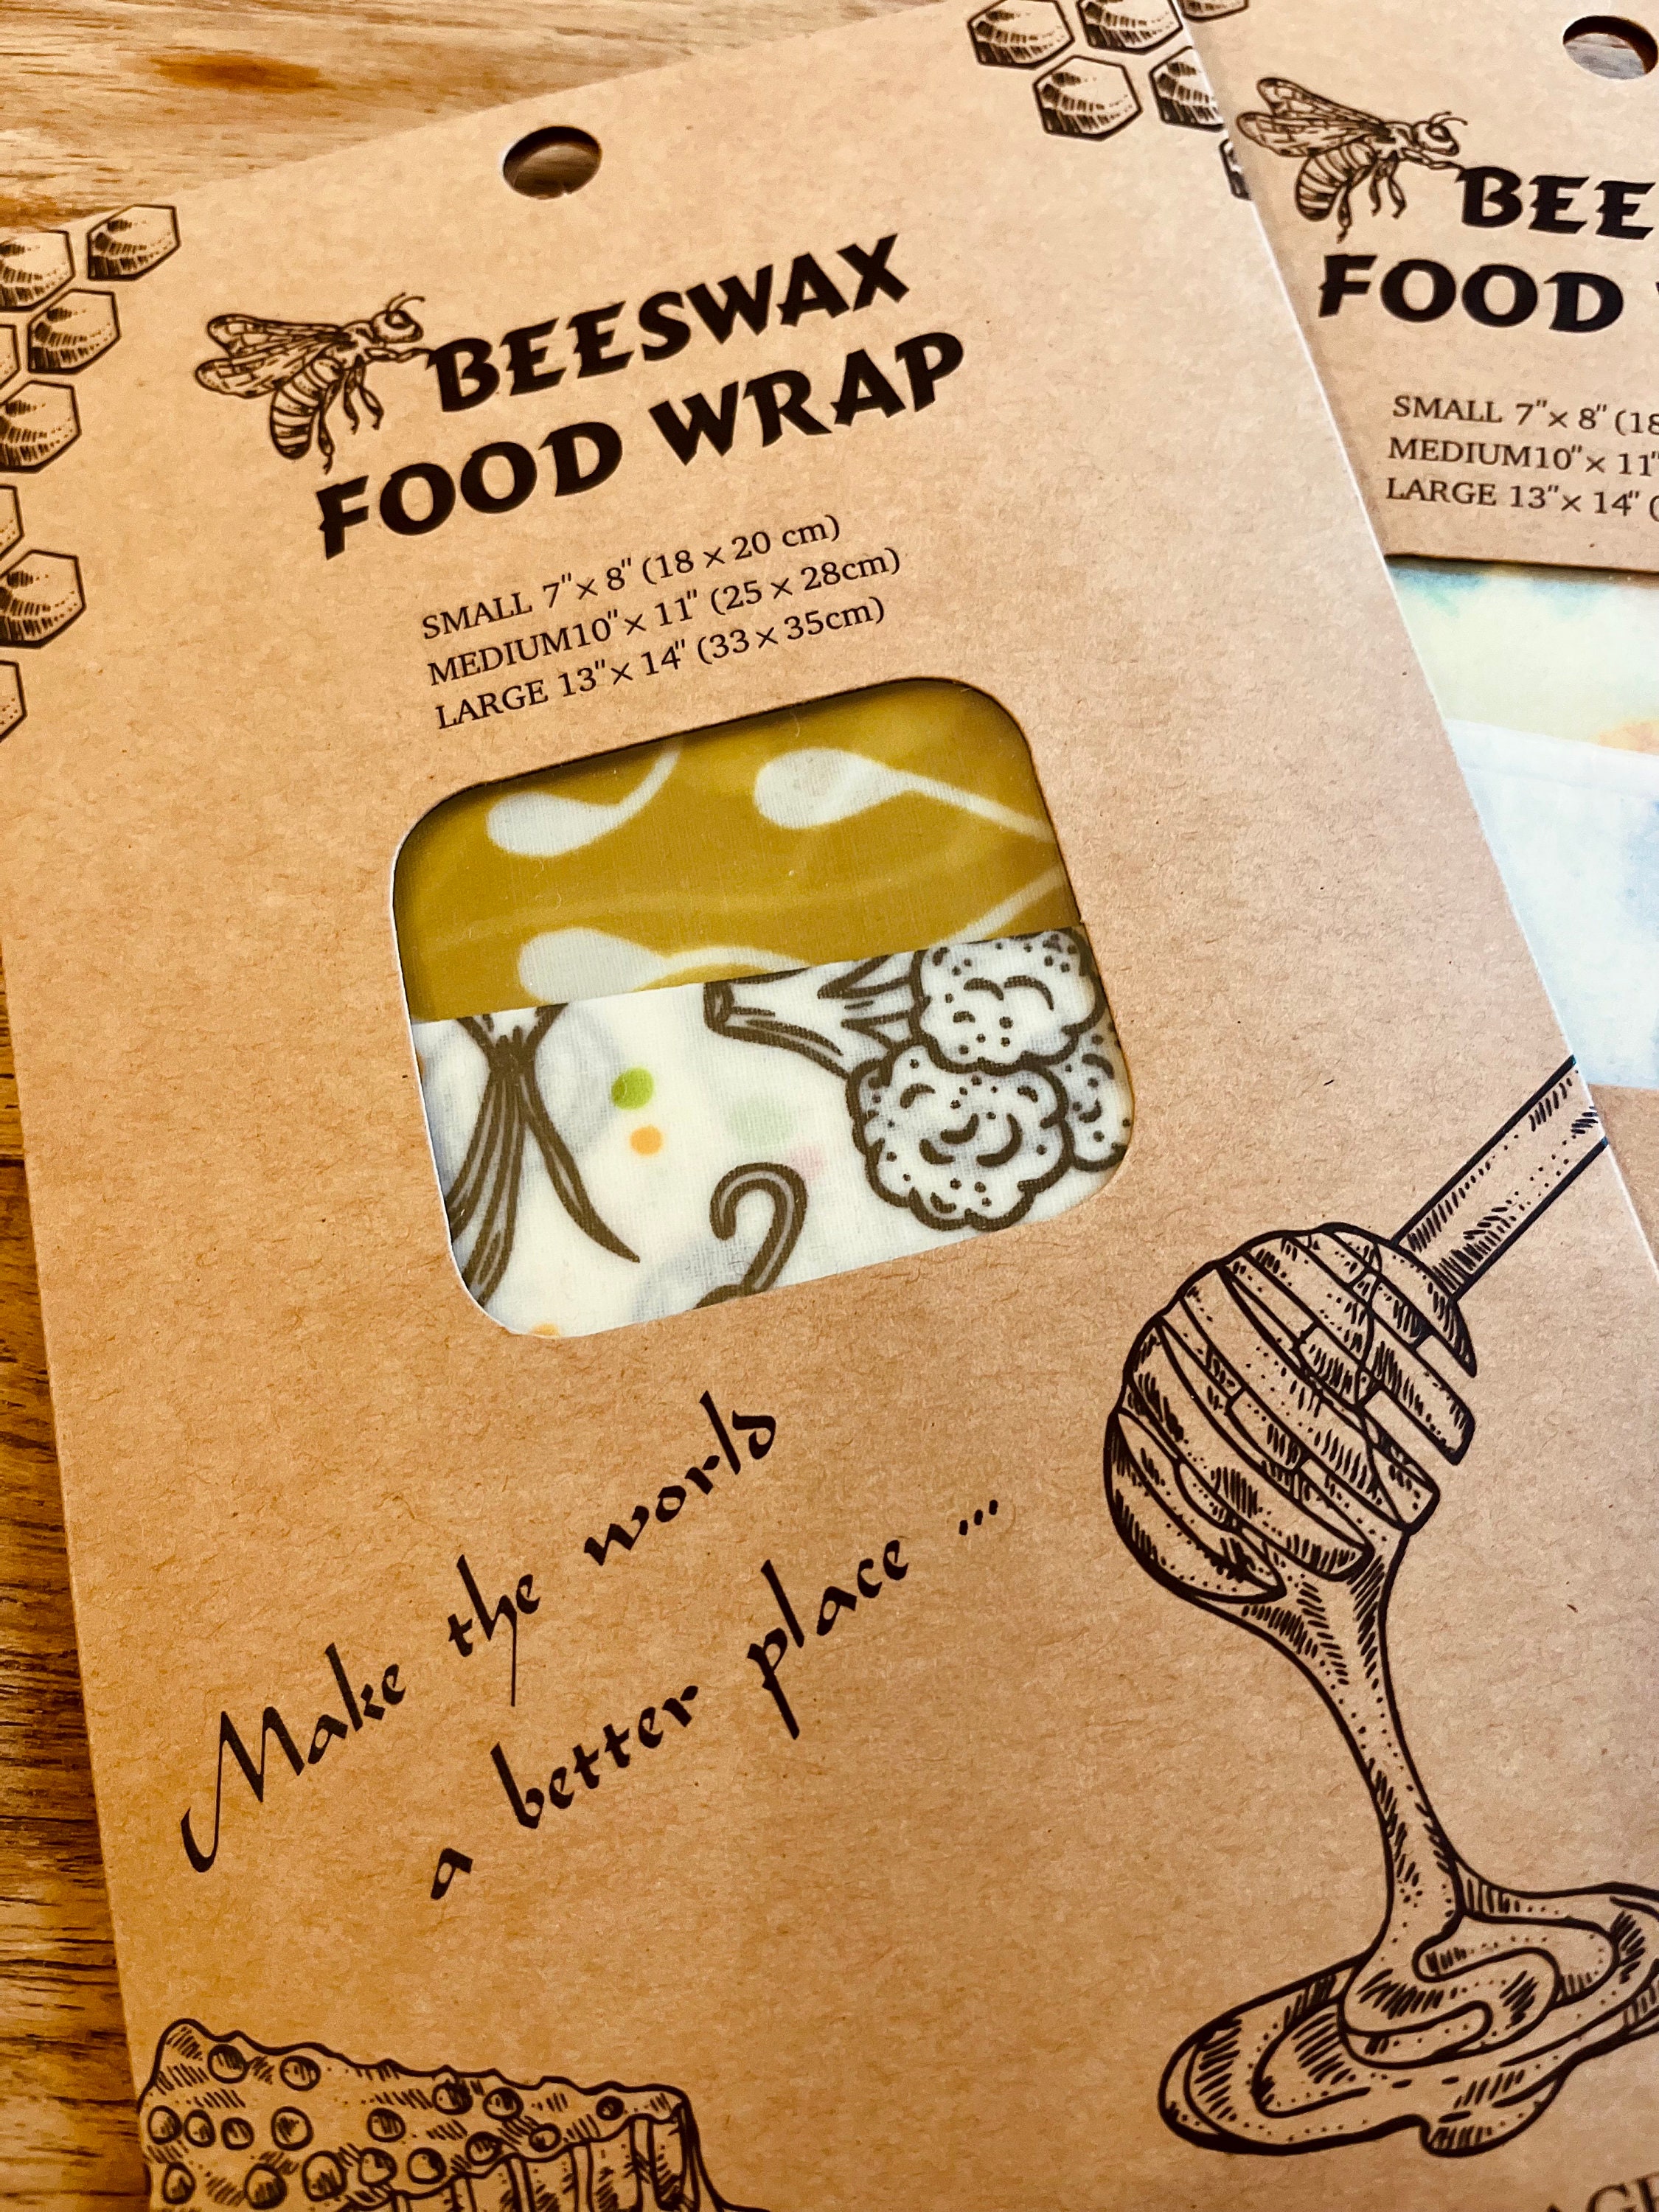 6 Beeswax Food Wrap, Beeswax Sandwich Wrap, Reusable Food Wrap